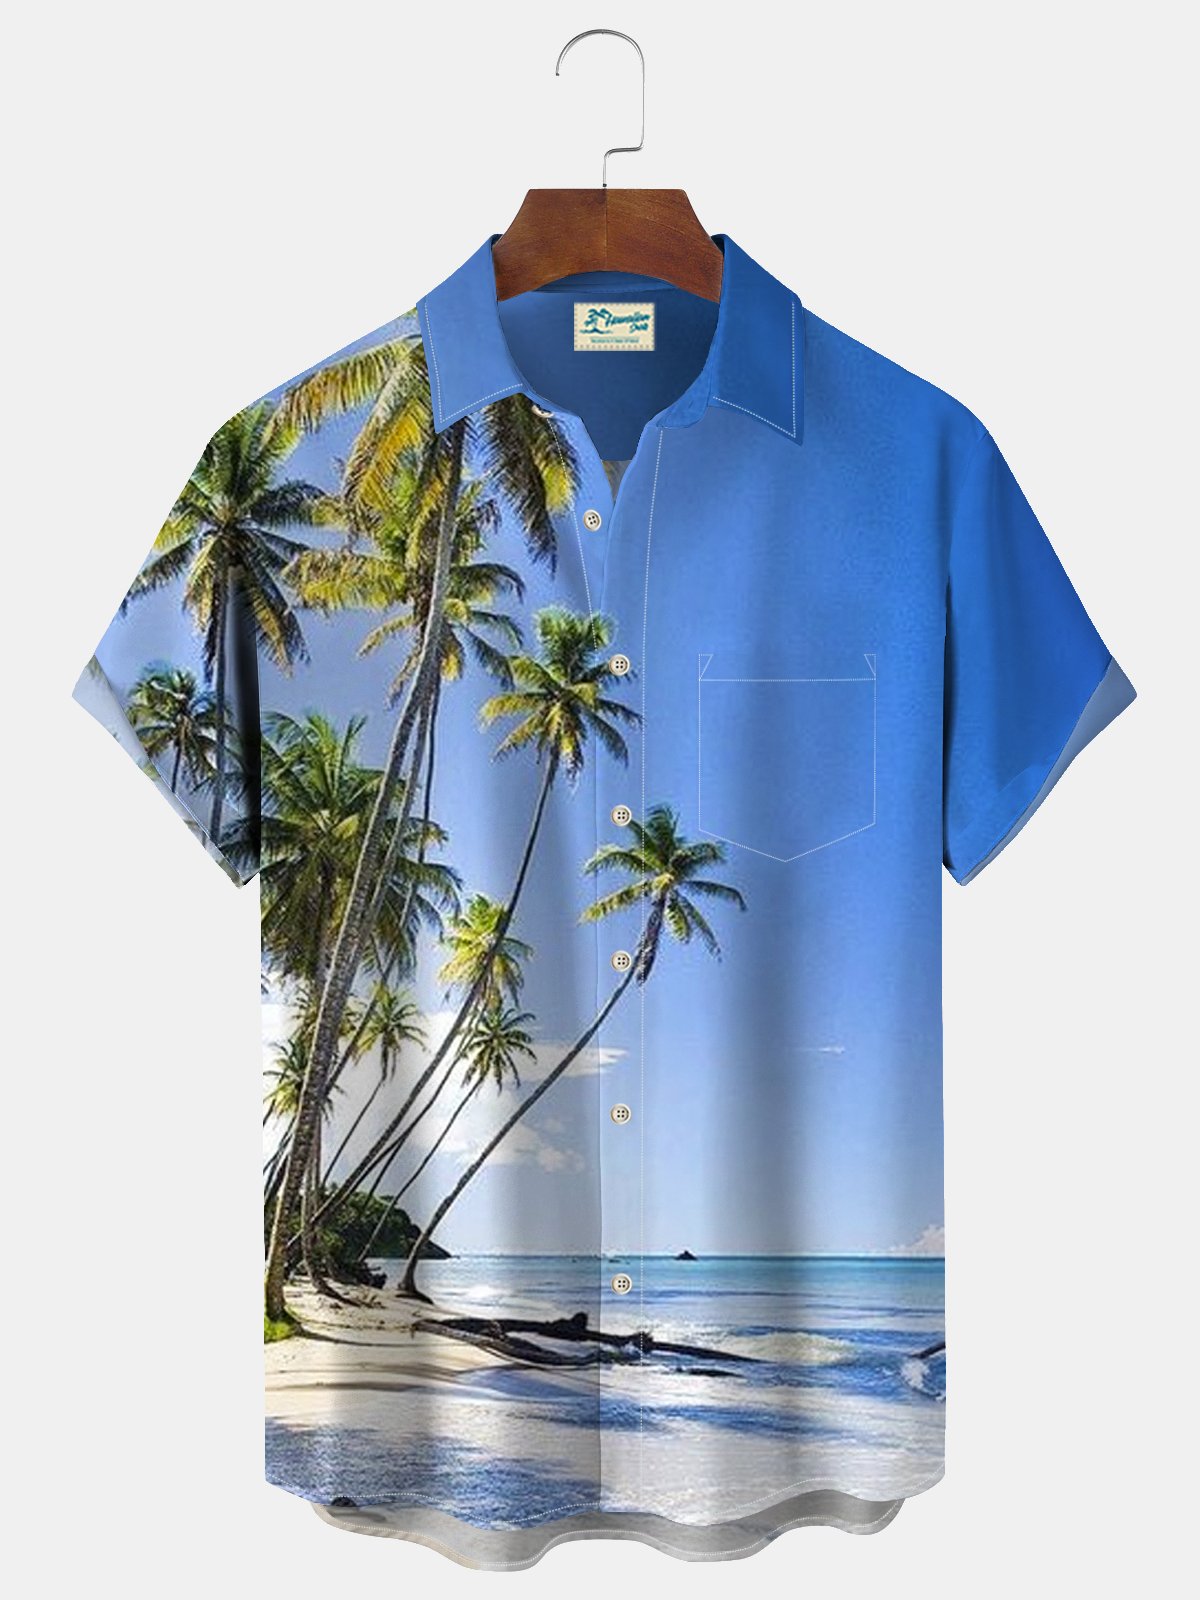 Royaura Beach Coconut Palm Print Men's Vacation Hawaiian Big and Tall Aloha Shirt